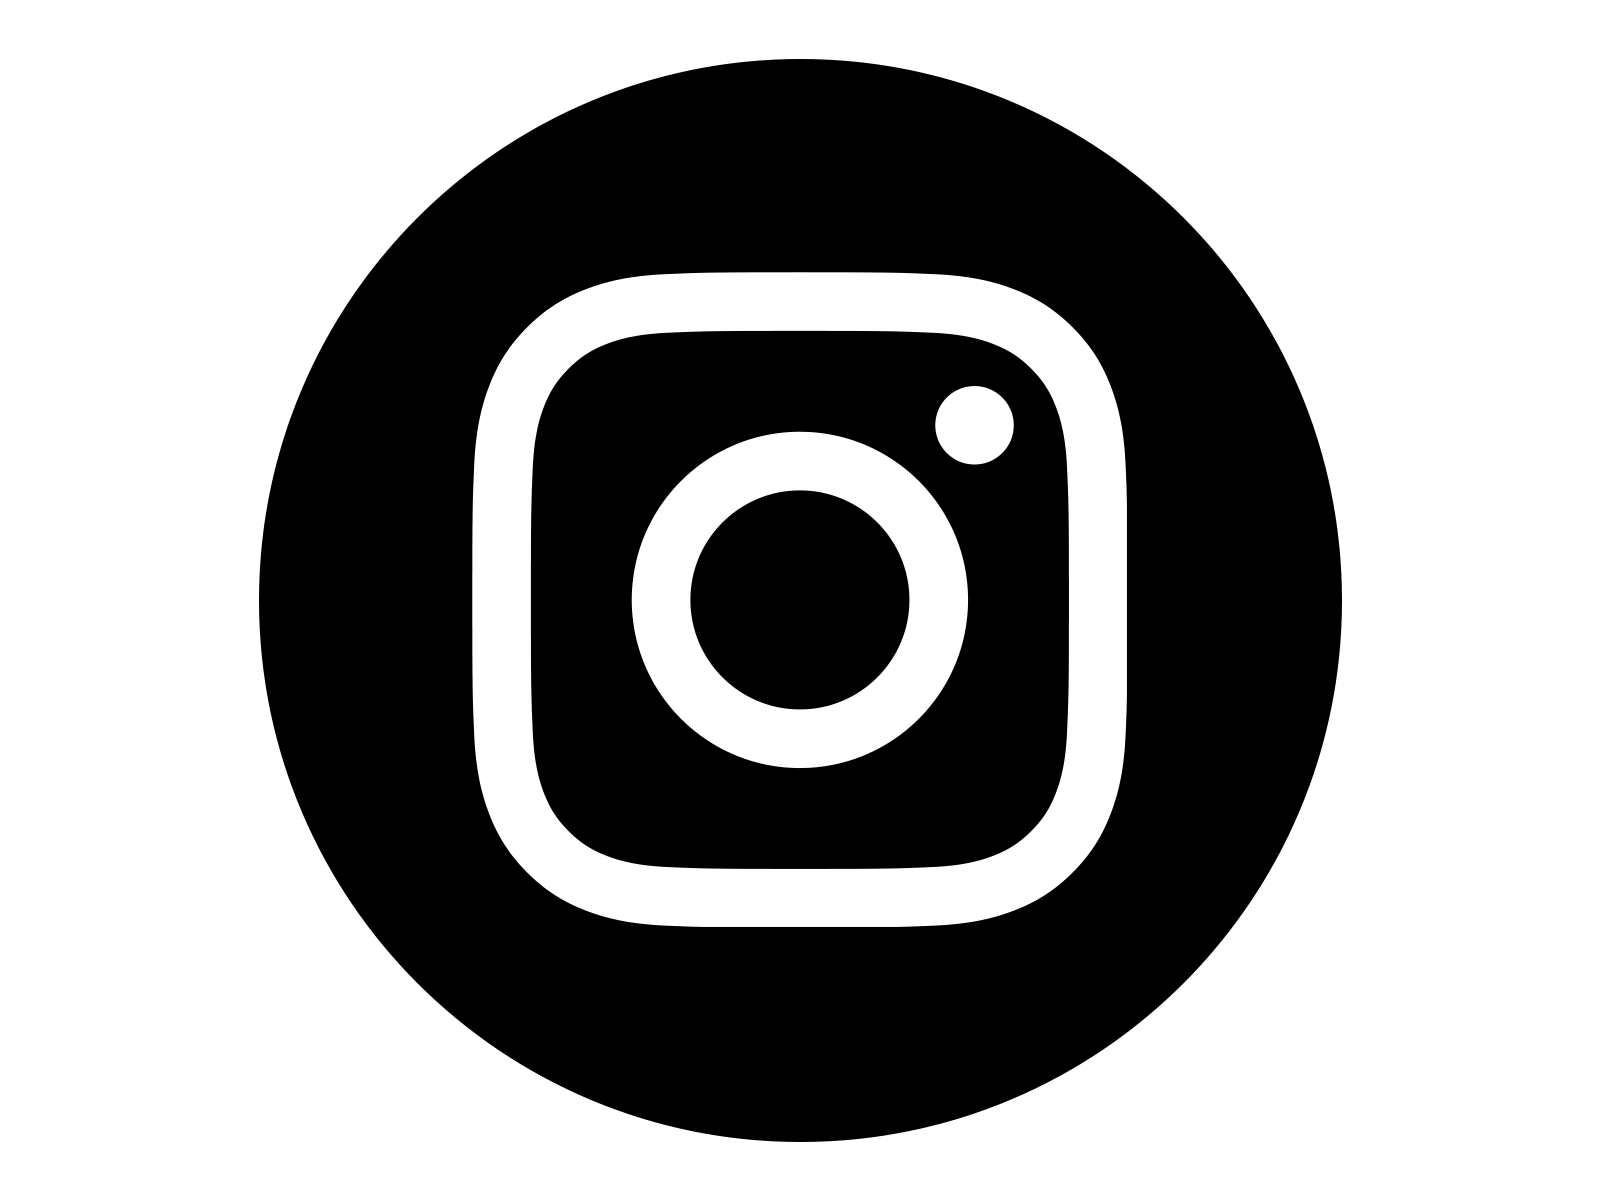 Instagram Draw Logo - Free social media icons